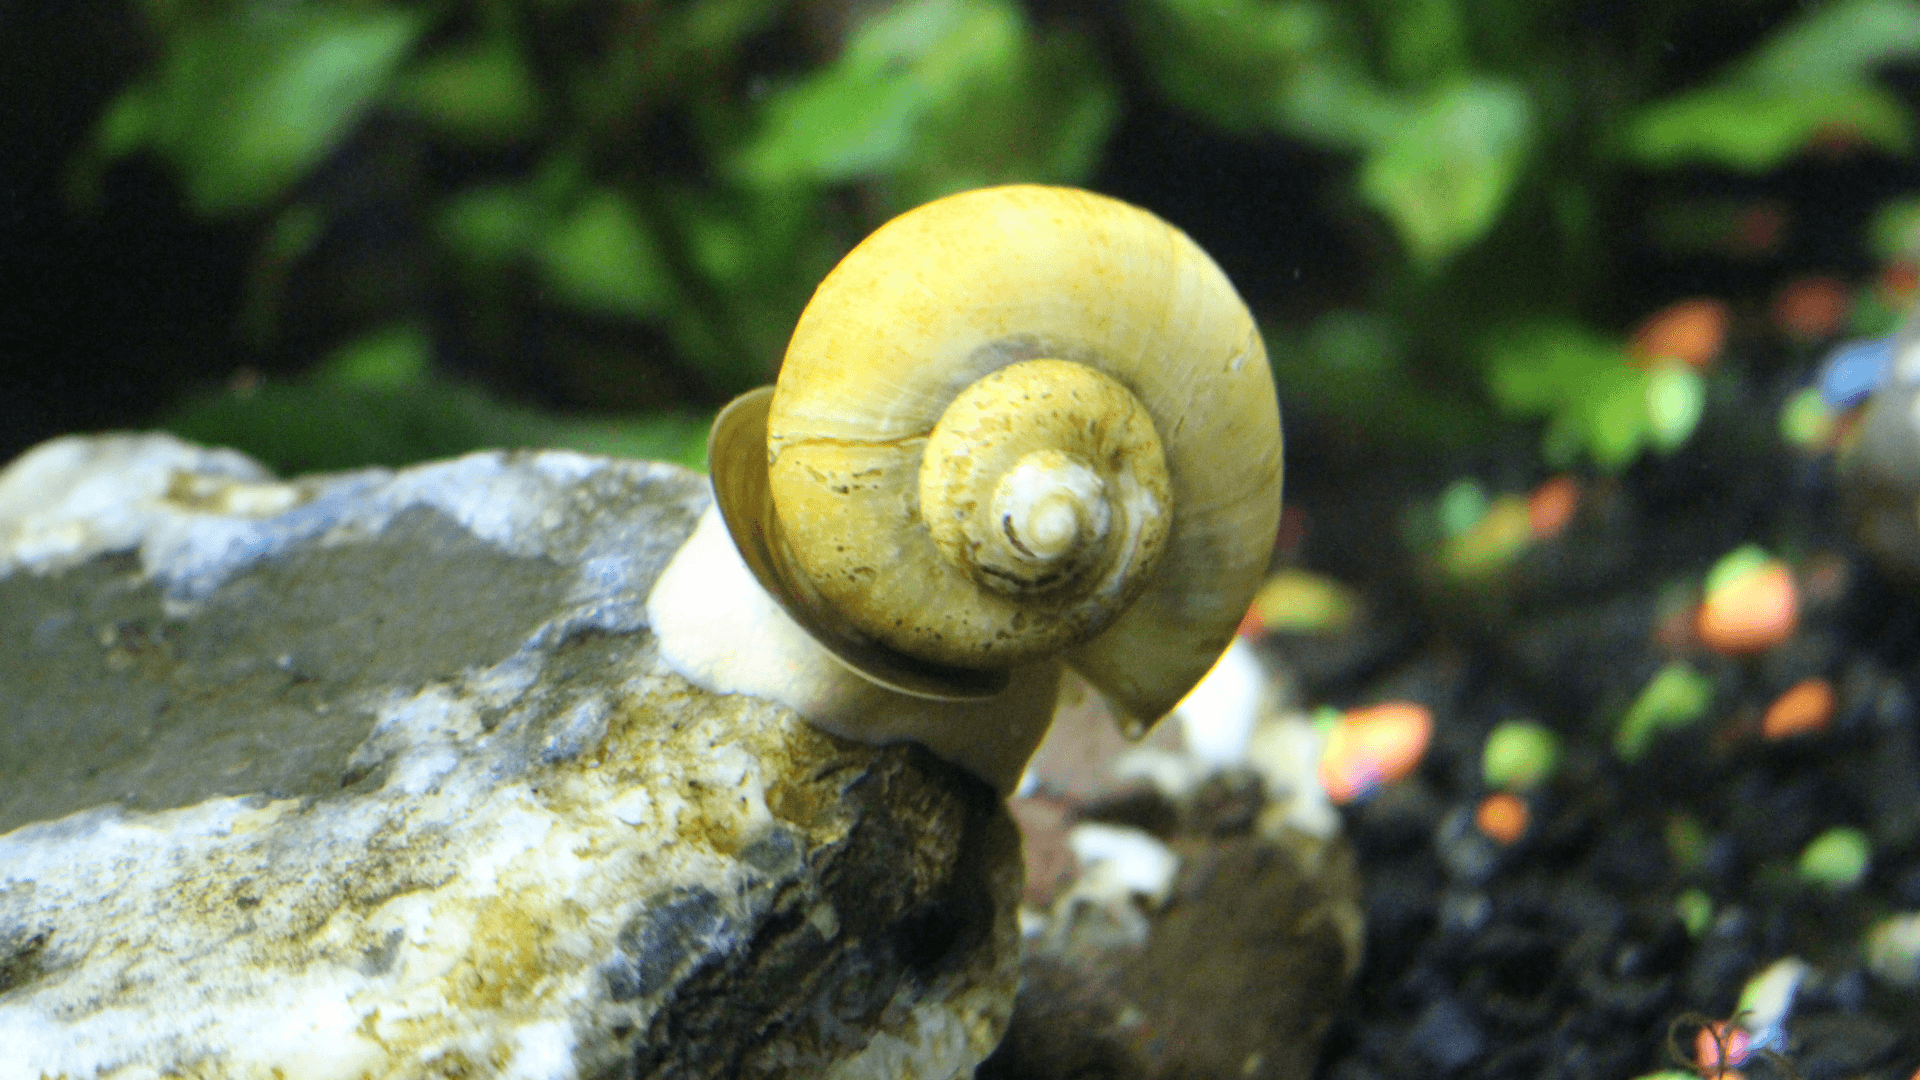 A photo of Mystery Snails